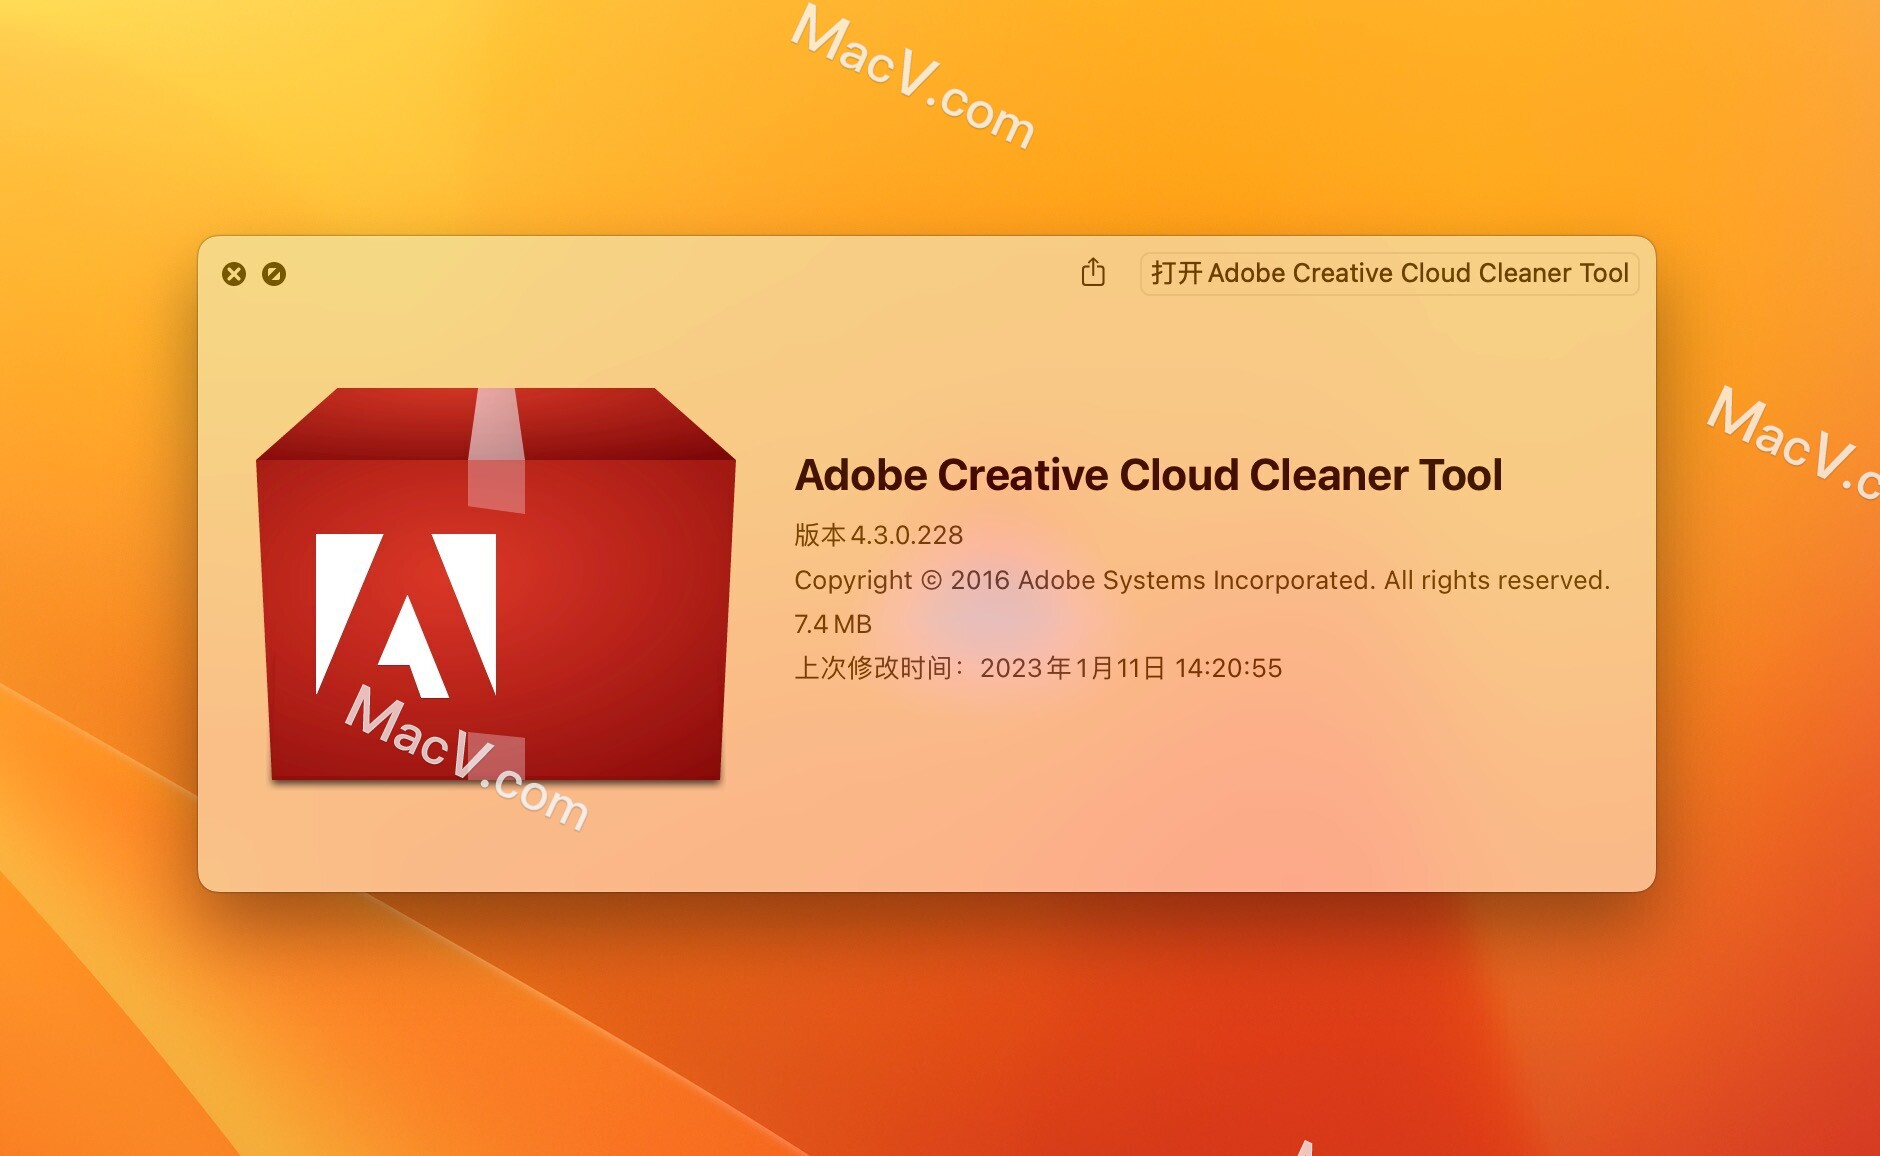 Adobe Creative Cloud Cleaner Tool 4.3.0.395 free instal